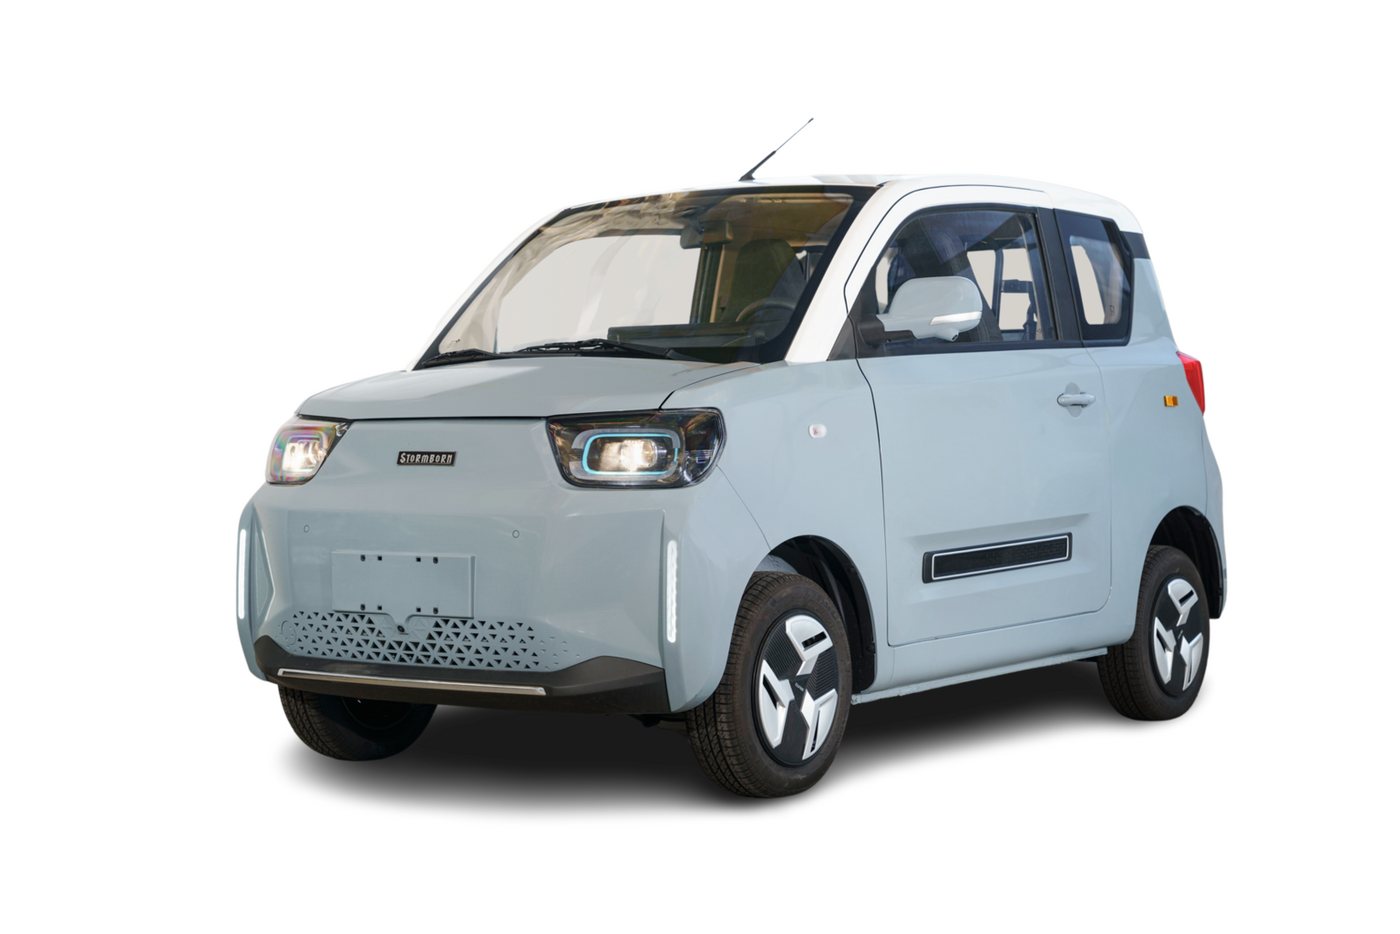 STORMBORN Elektromobil City-Pony, 13000,00 W, 90,00 km/h, Fahrerairbag, maximale Zuladung 440 kg, ABS & EBO System, Klimaanlage von STORMBORN